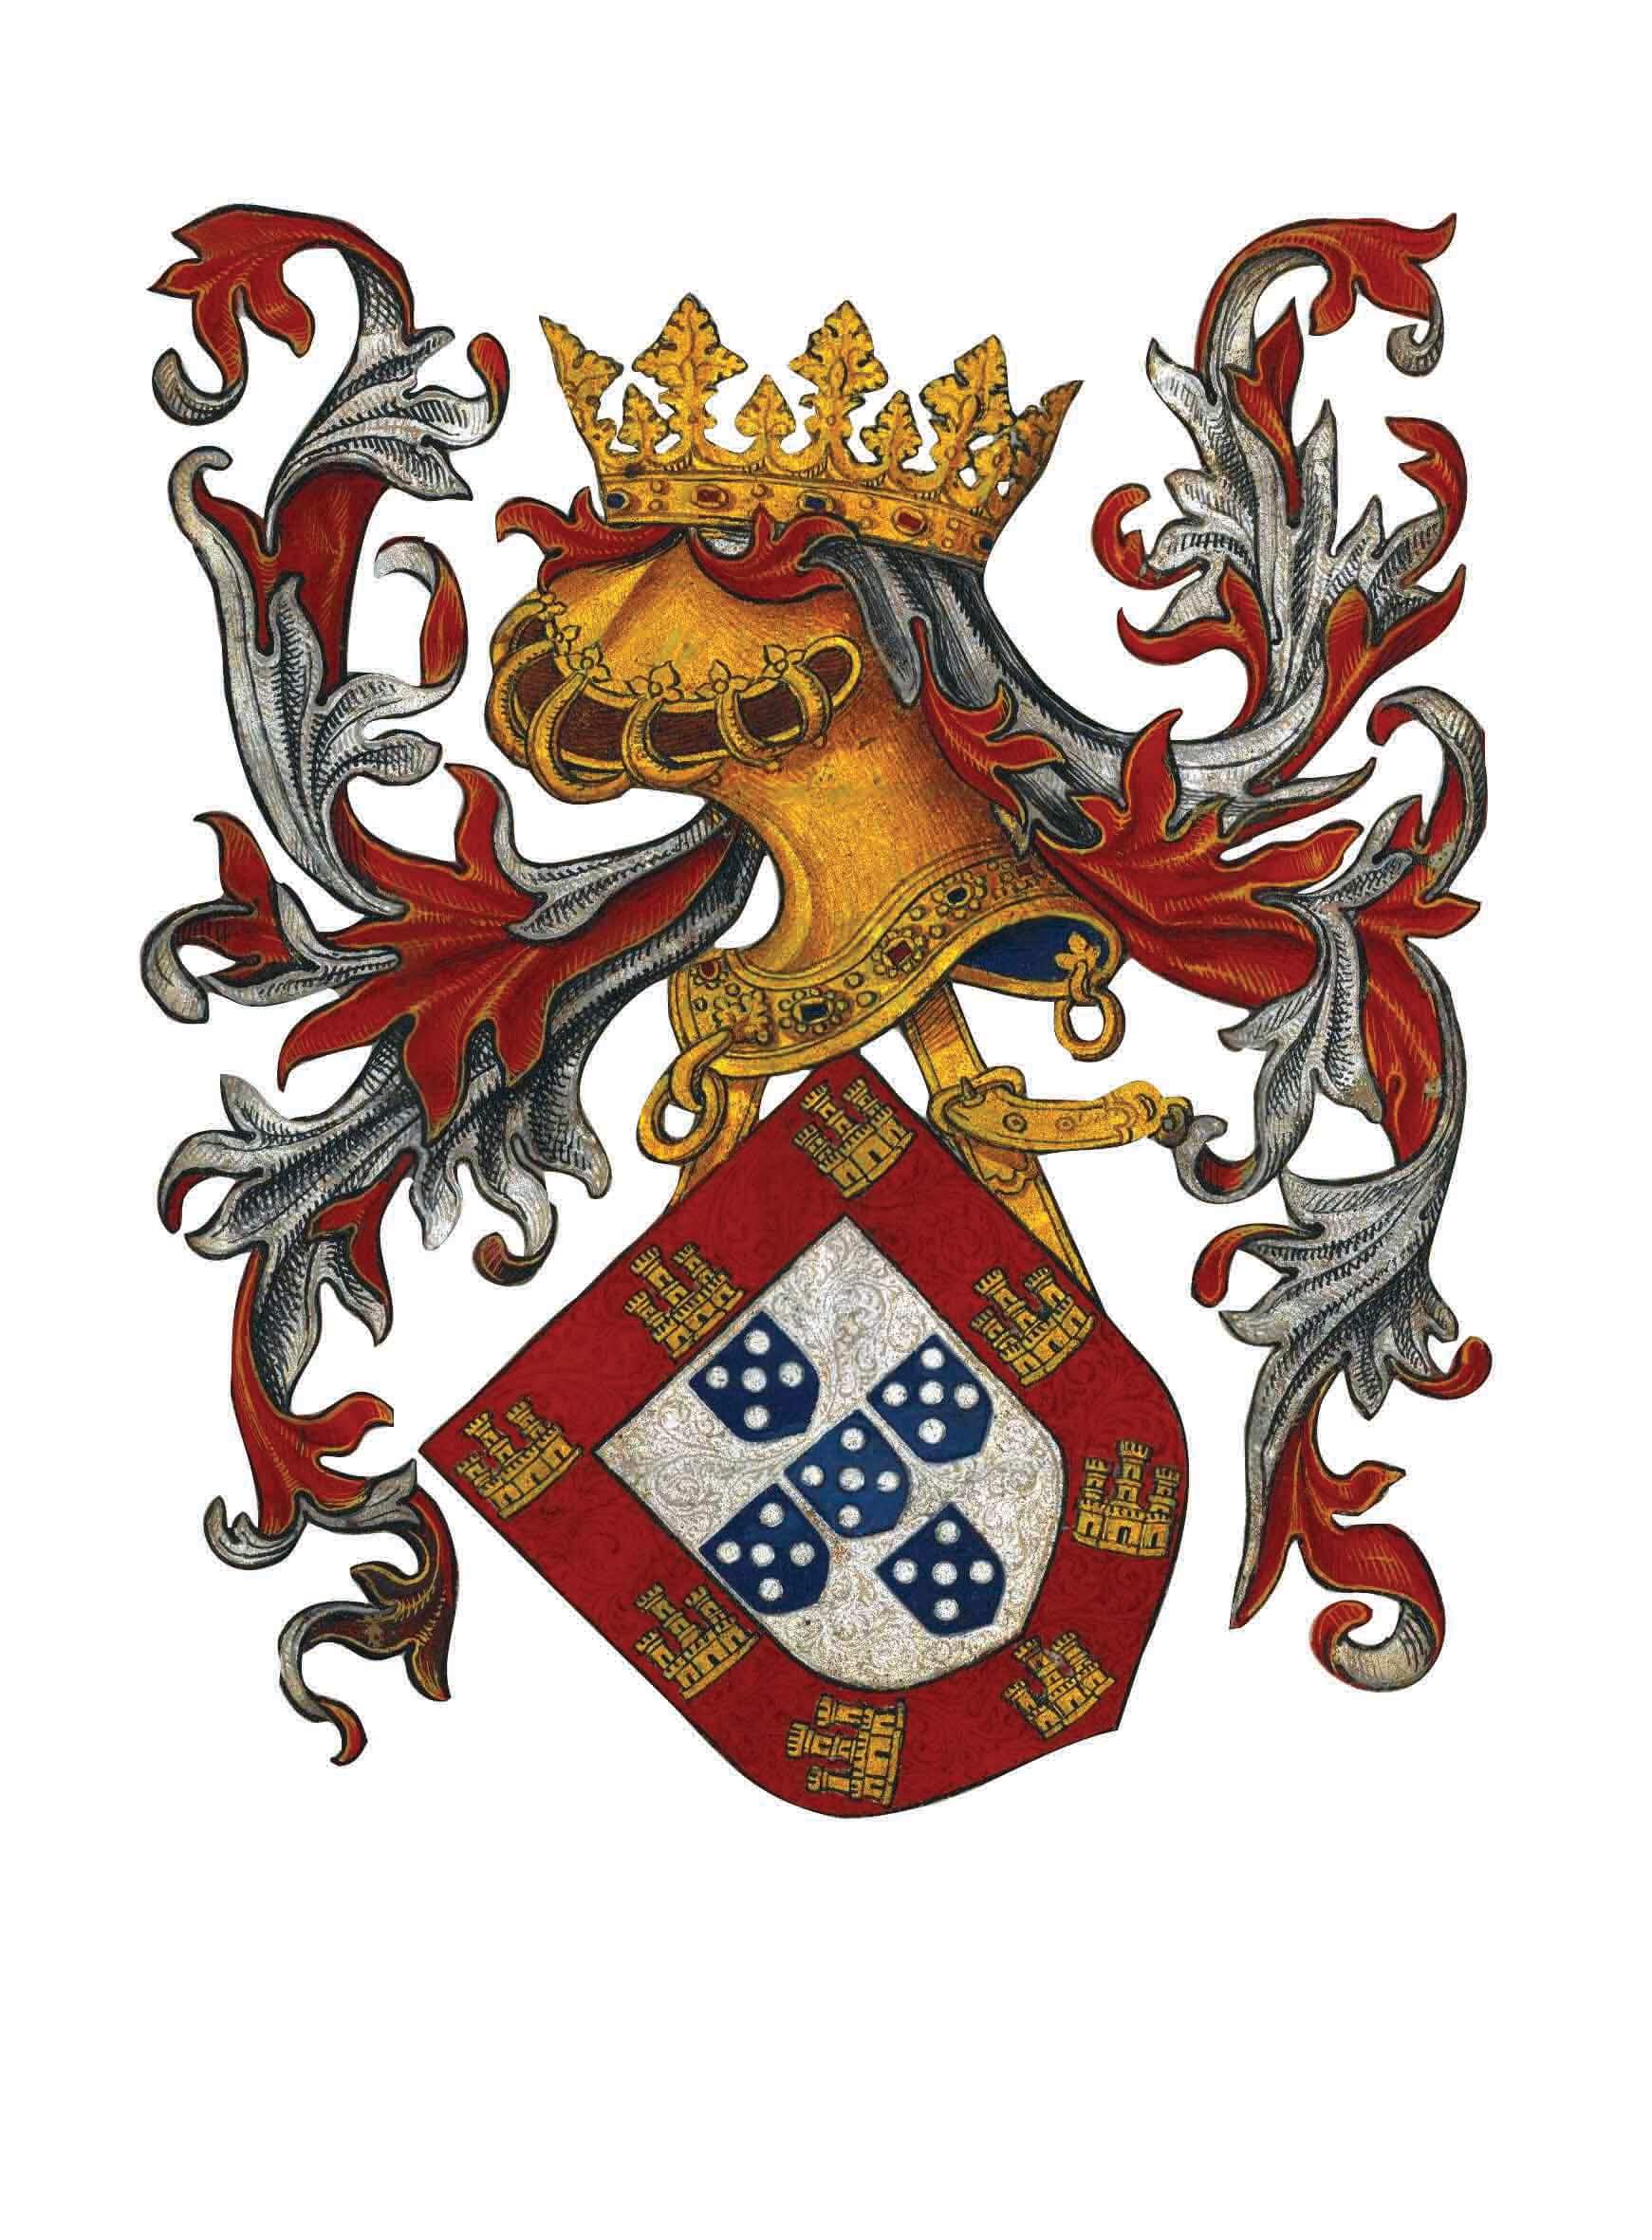 Portuguese royal armor.